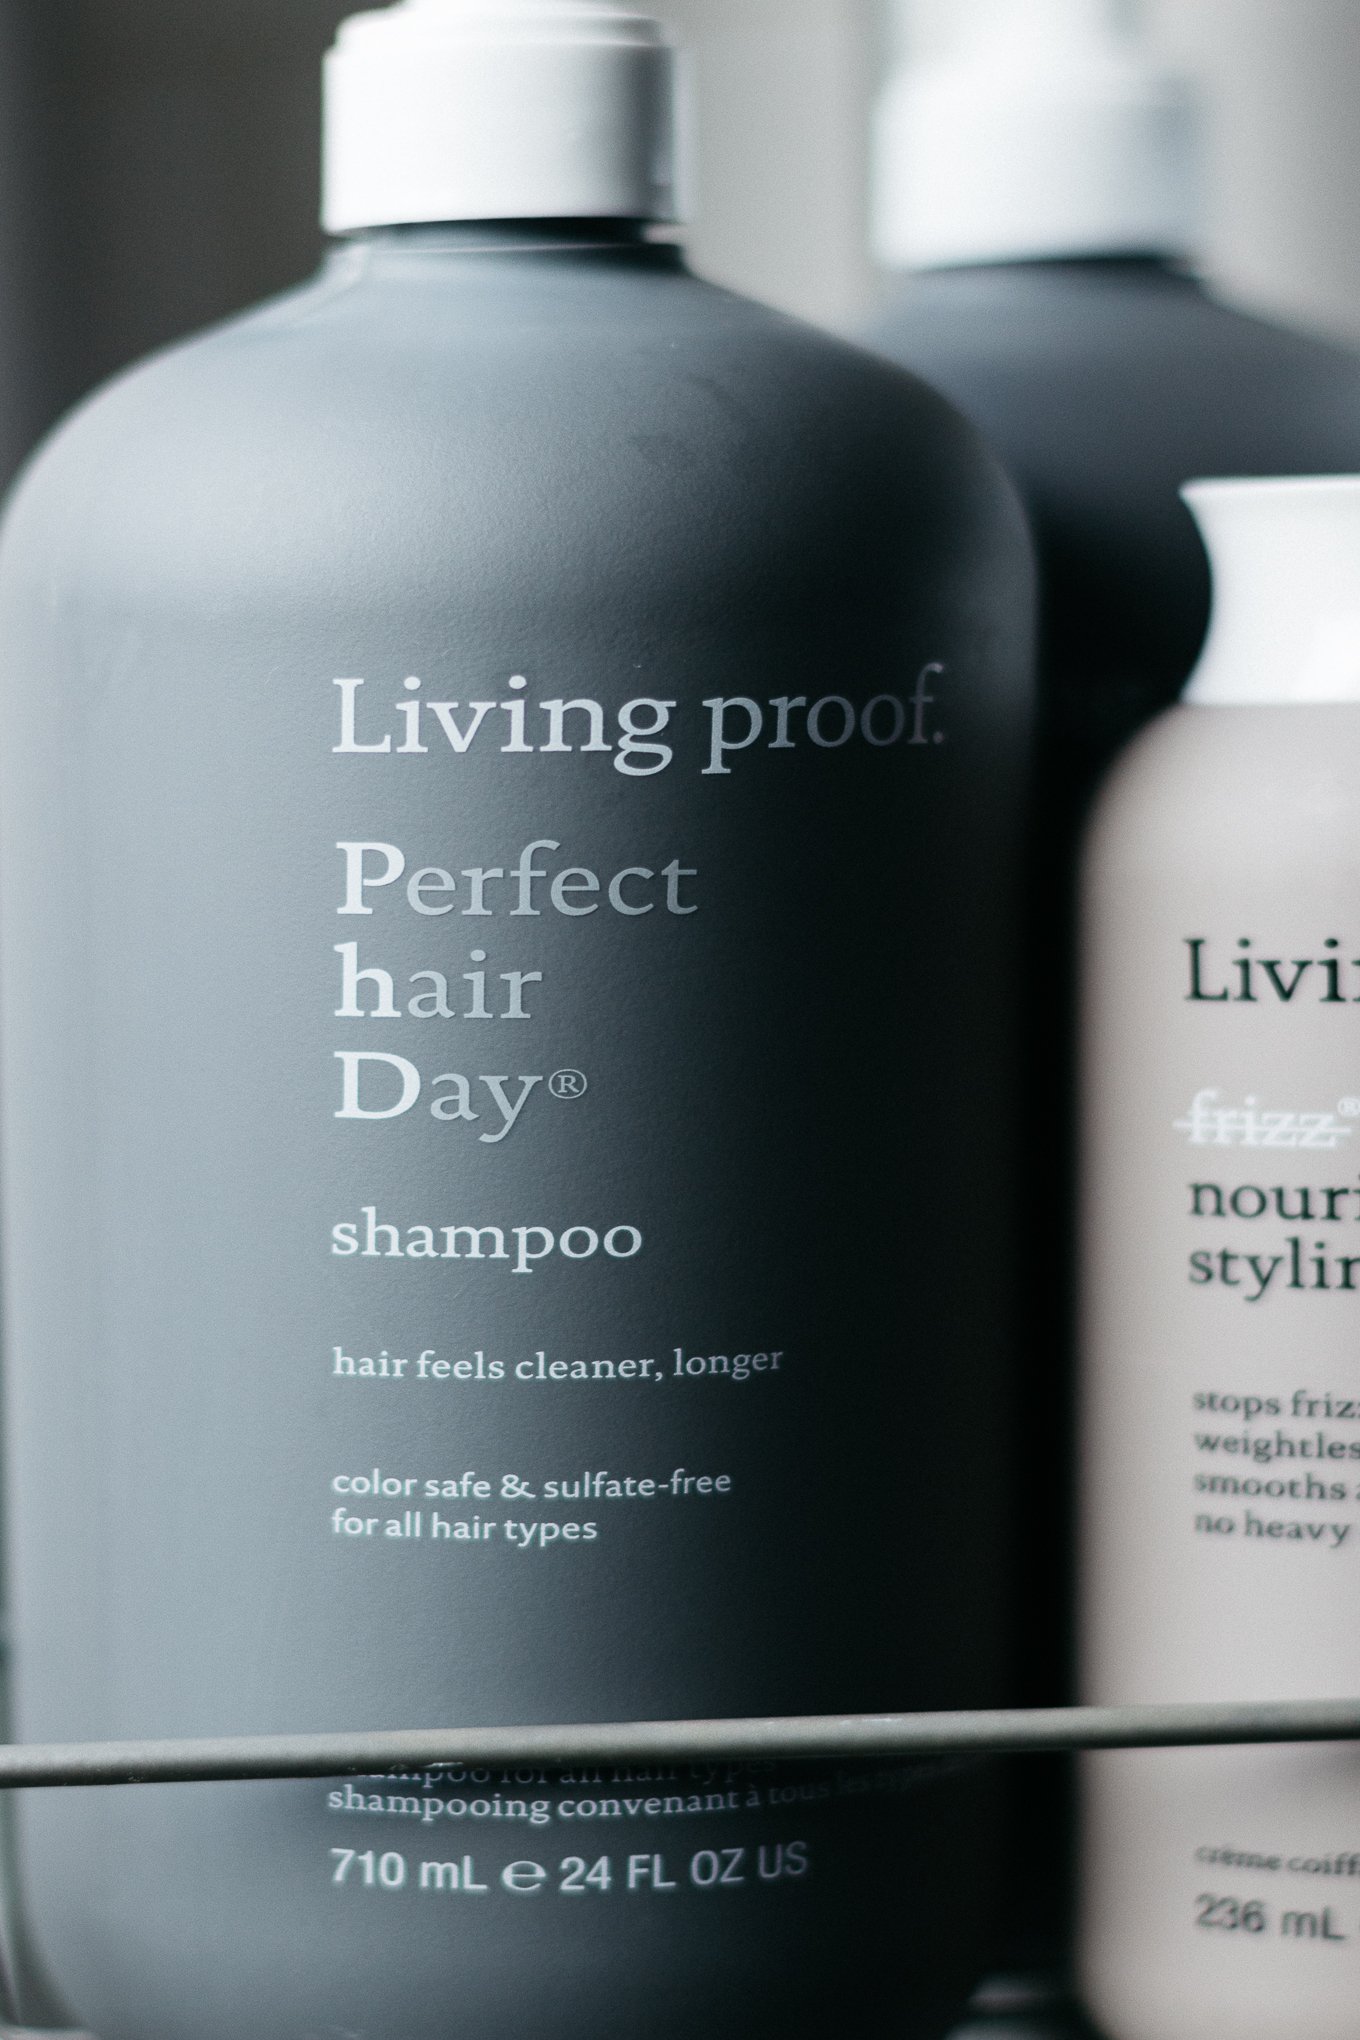 living proof, living proof hair care, jennifer aniston hair, chris mcmillan salon, mens hair tips